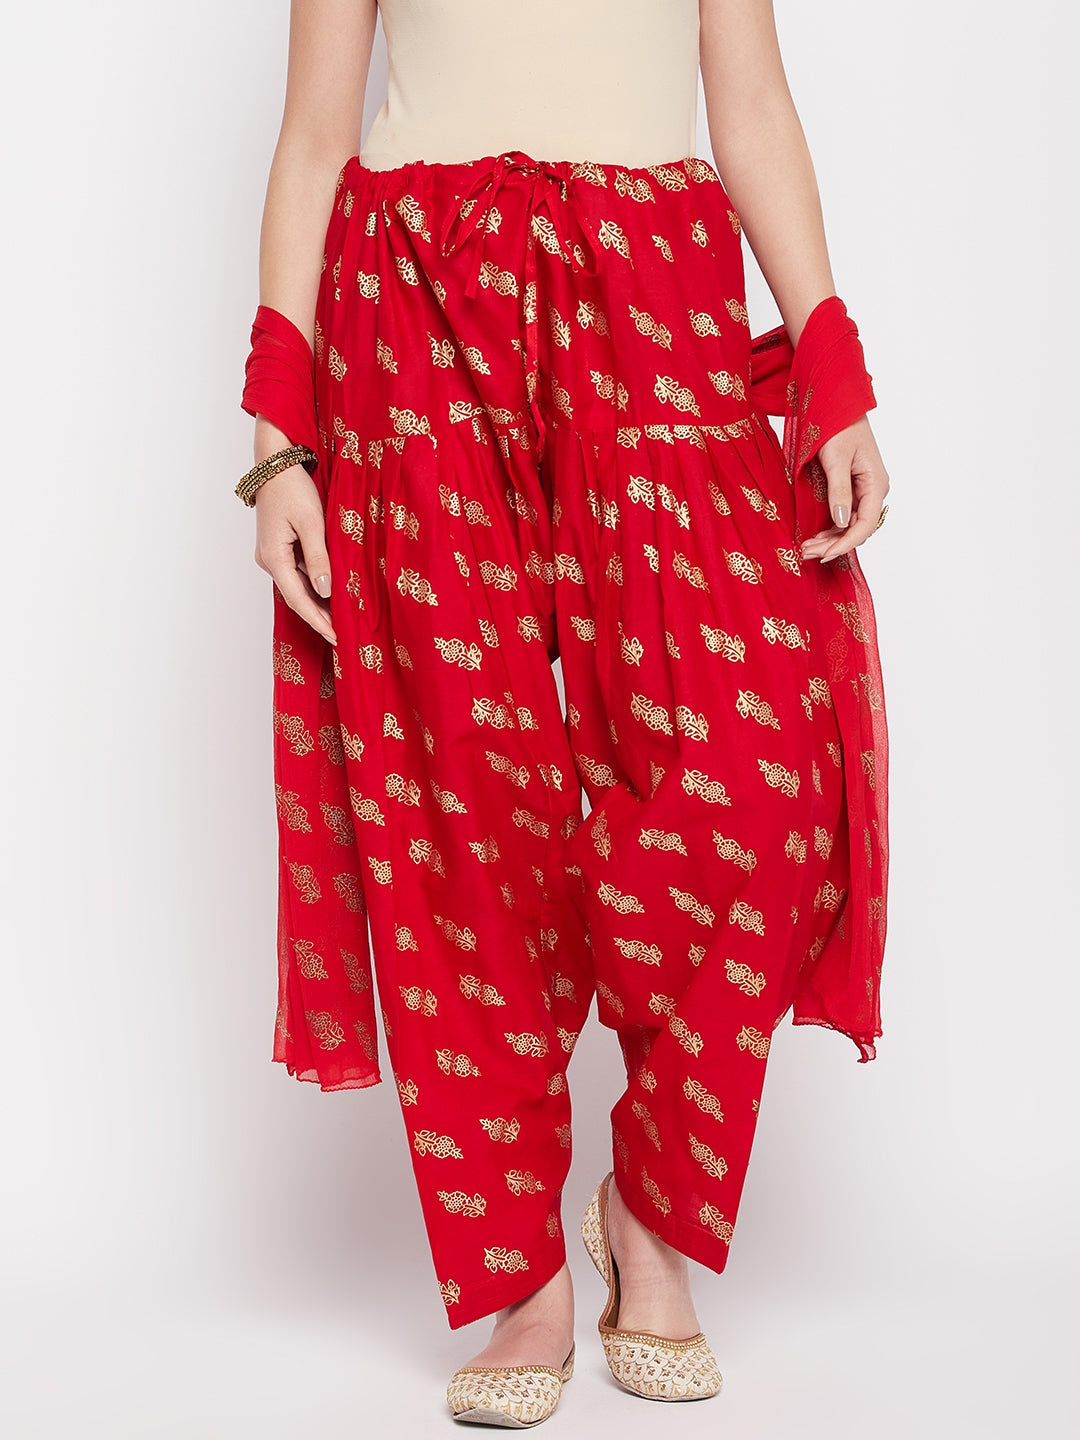 Clora Red Printed Cotton Salwar and Dupatta